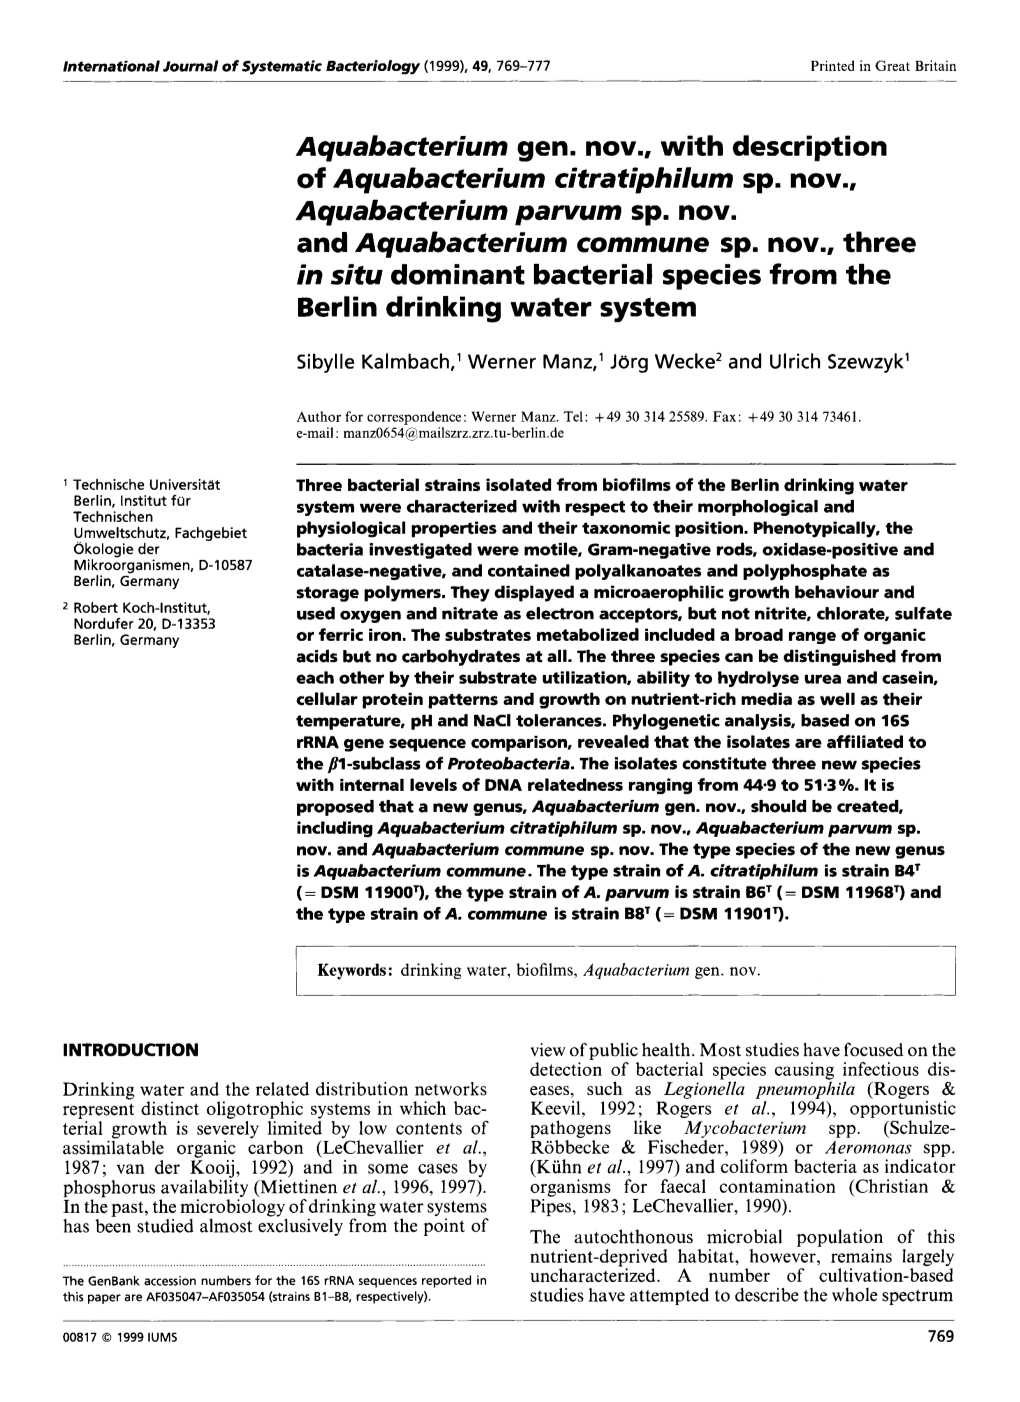 Aquabacterium Gen. Nov., with Description of Aquabacterium Citratiphilum Sp